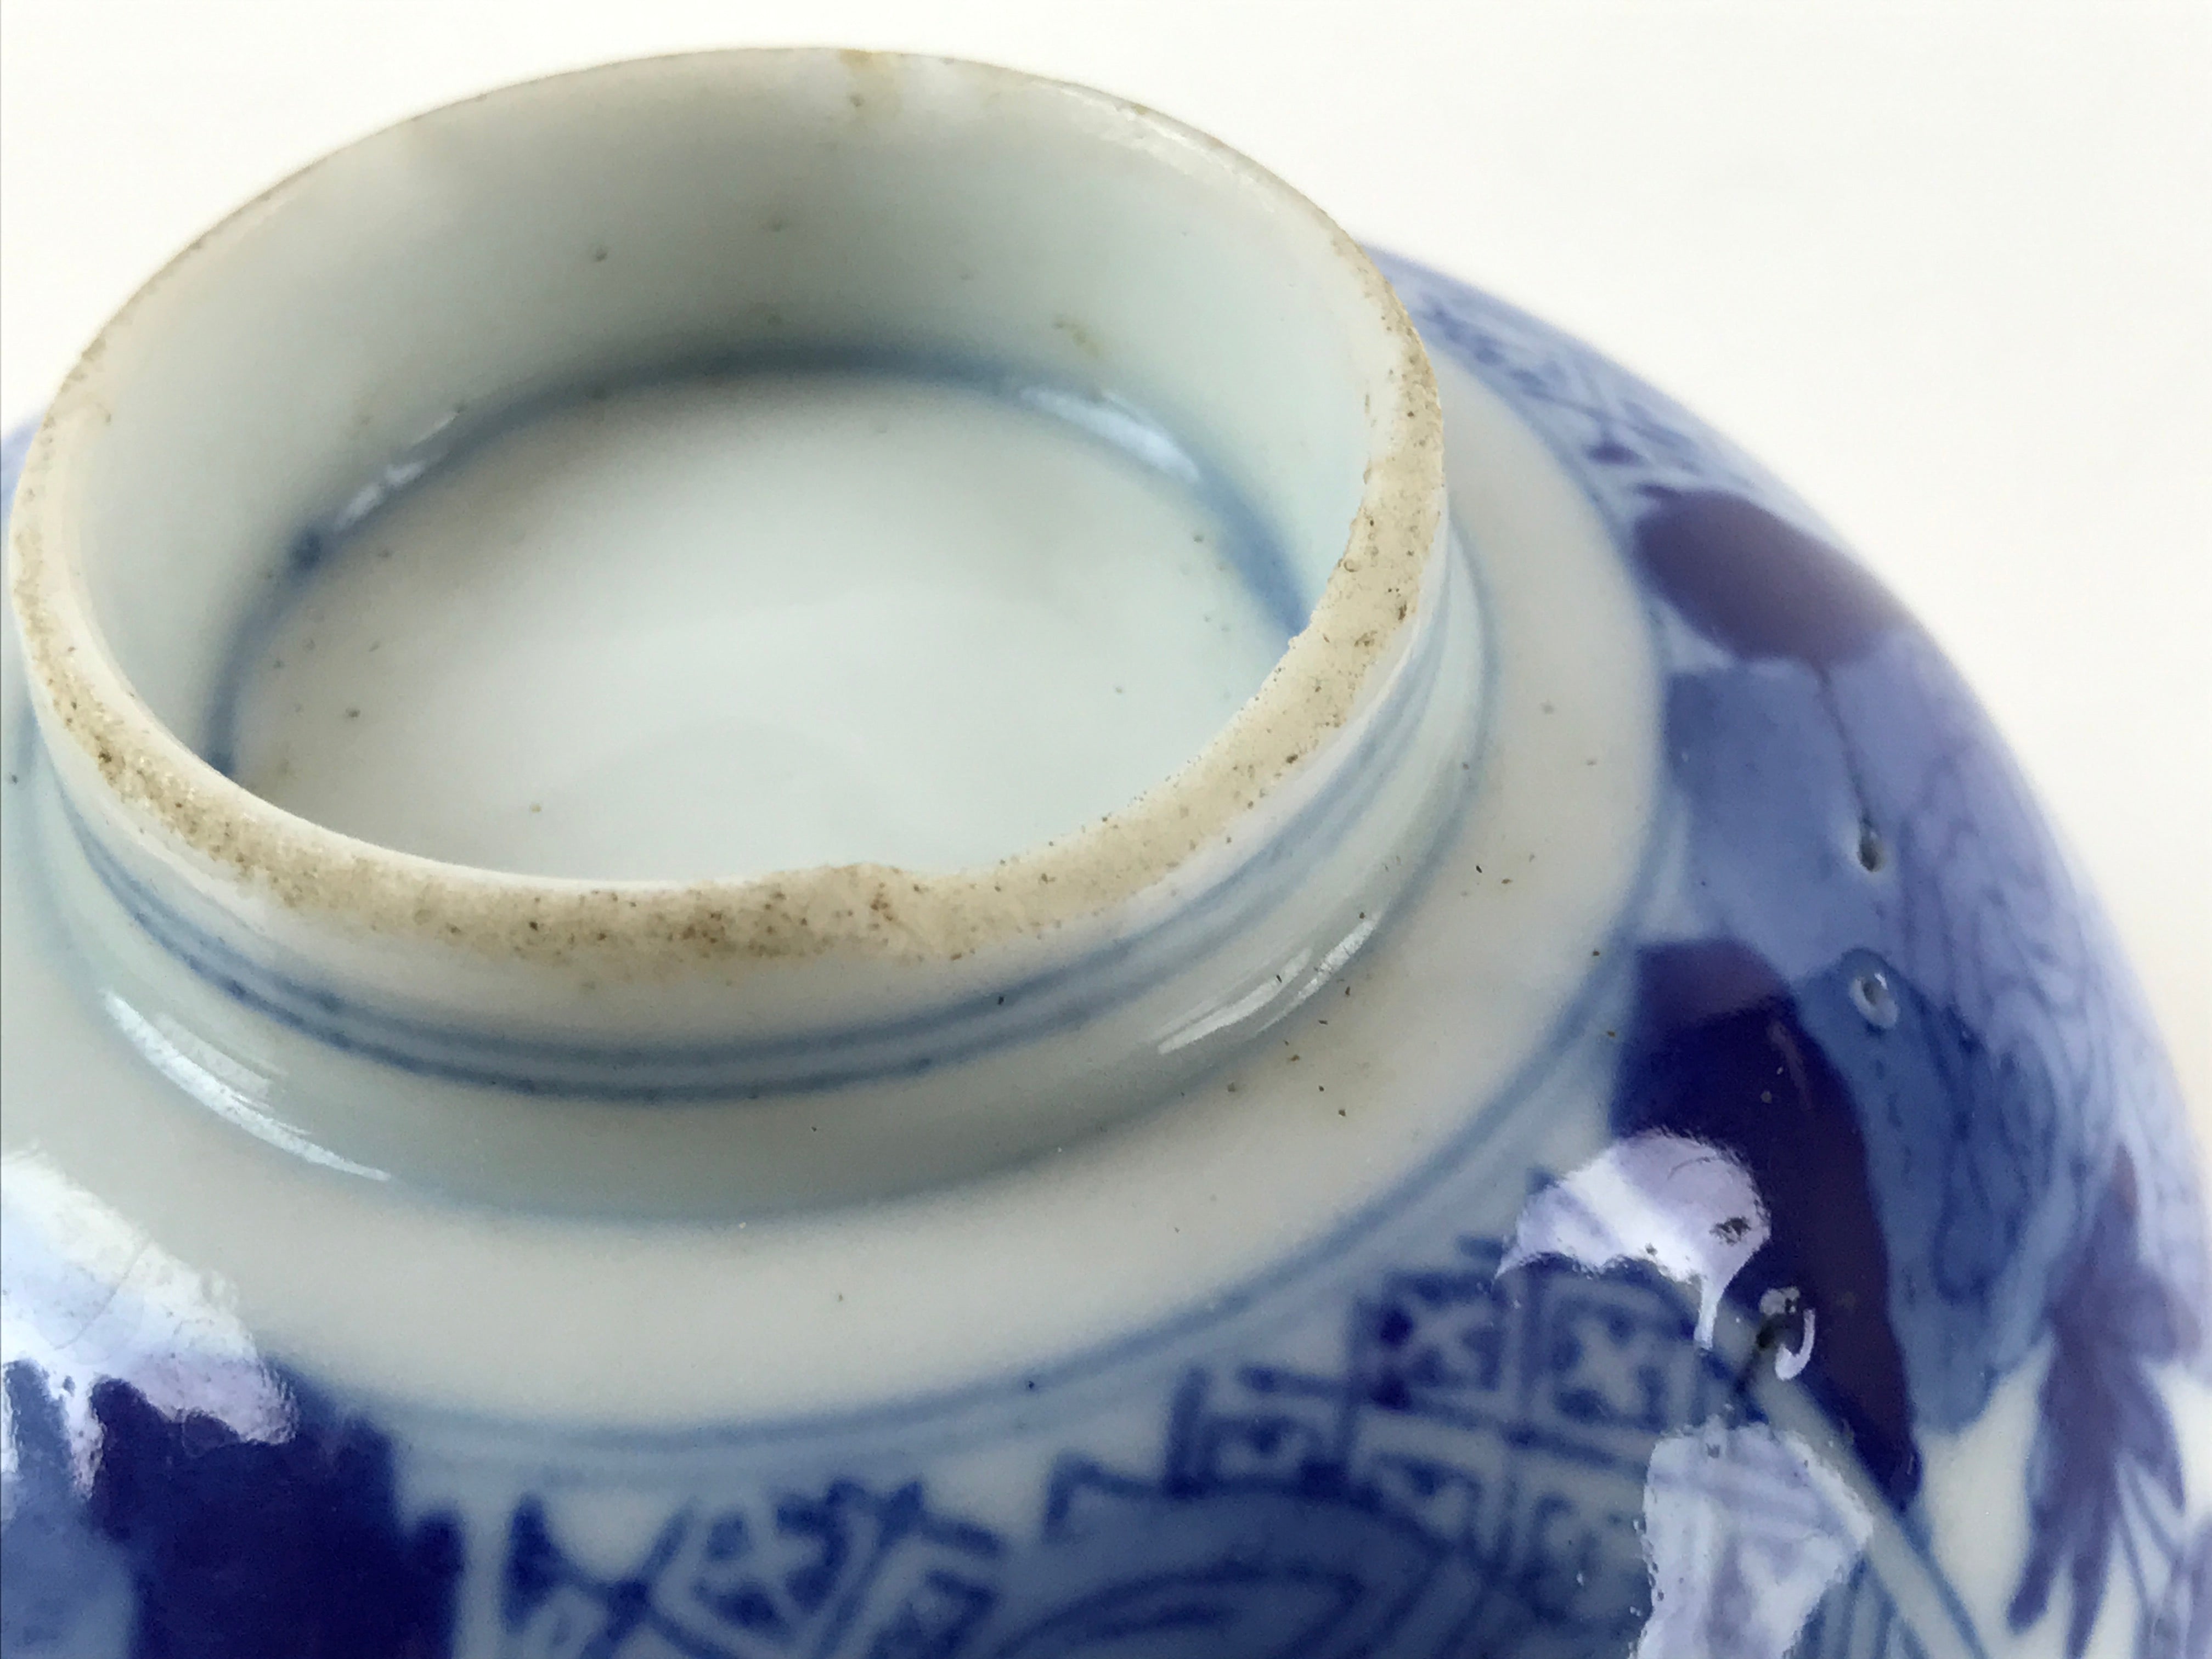 Japanese Porcelain Sometsuke Rice Bowl Vtg Floral Paulownia Blue White PY697